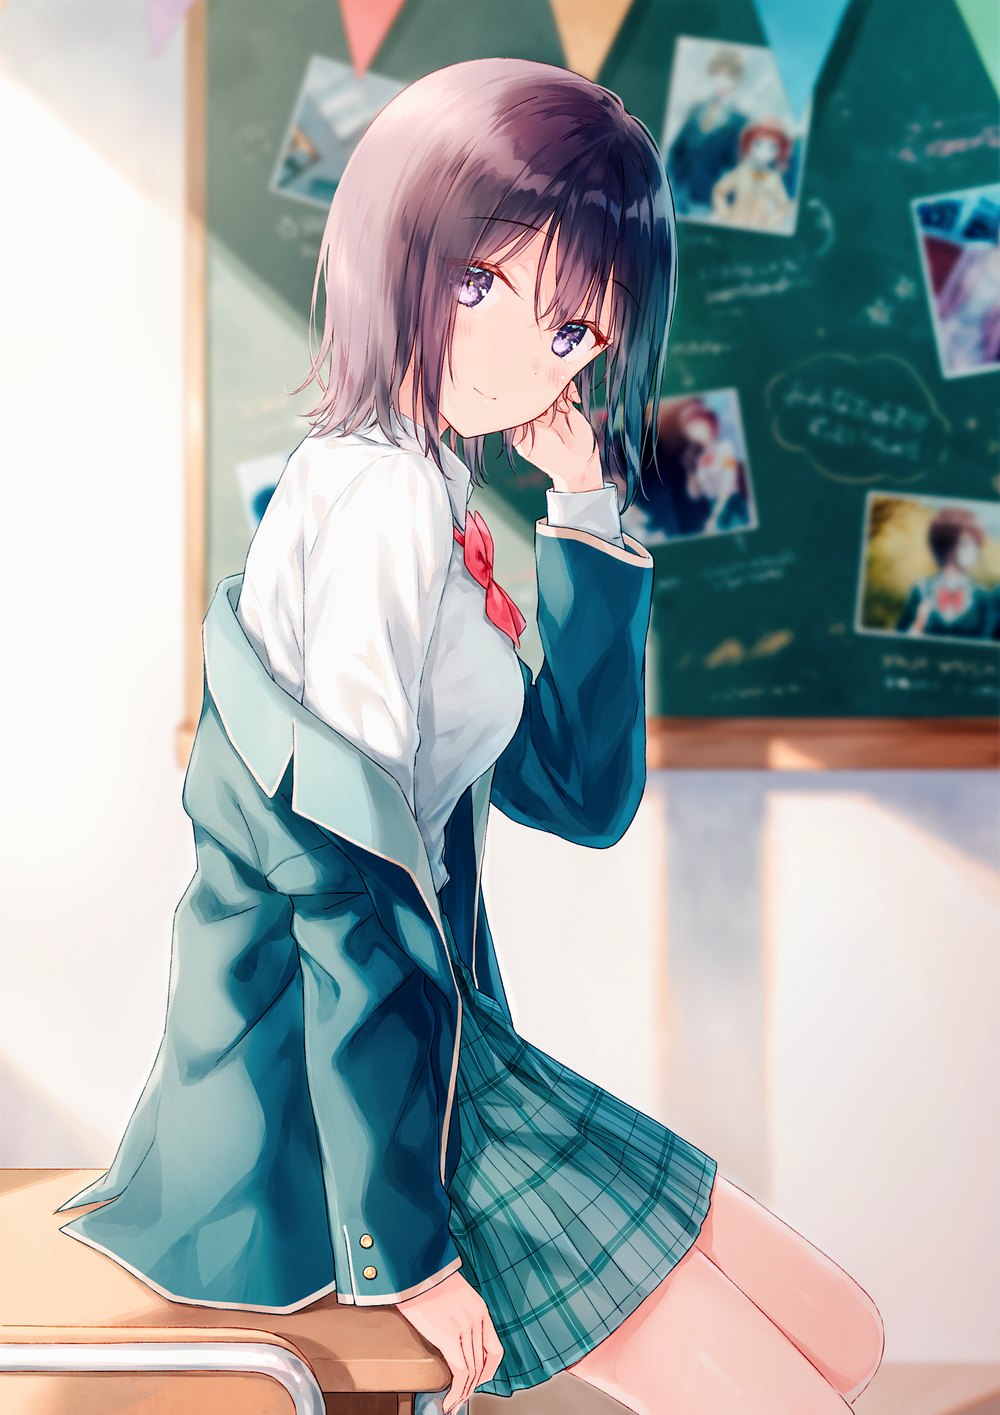 Anime 1000x1415 anime anime girls digital art artwork 2D portrait display vertical Hiten school uniform short hair purple hair purple eyes classroom